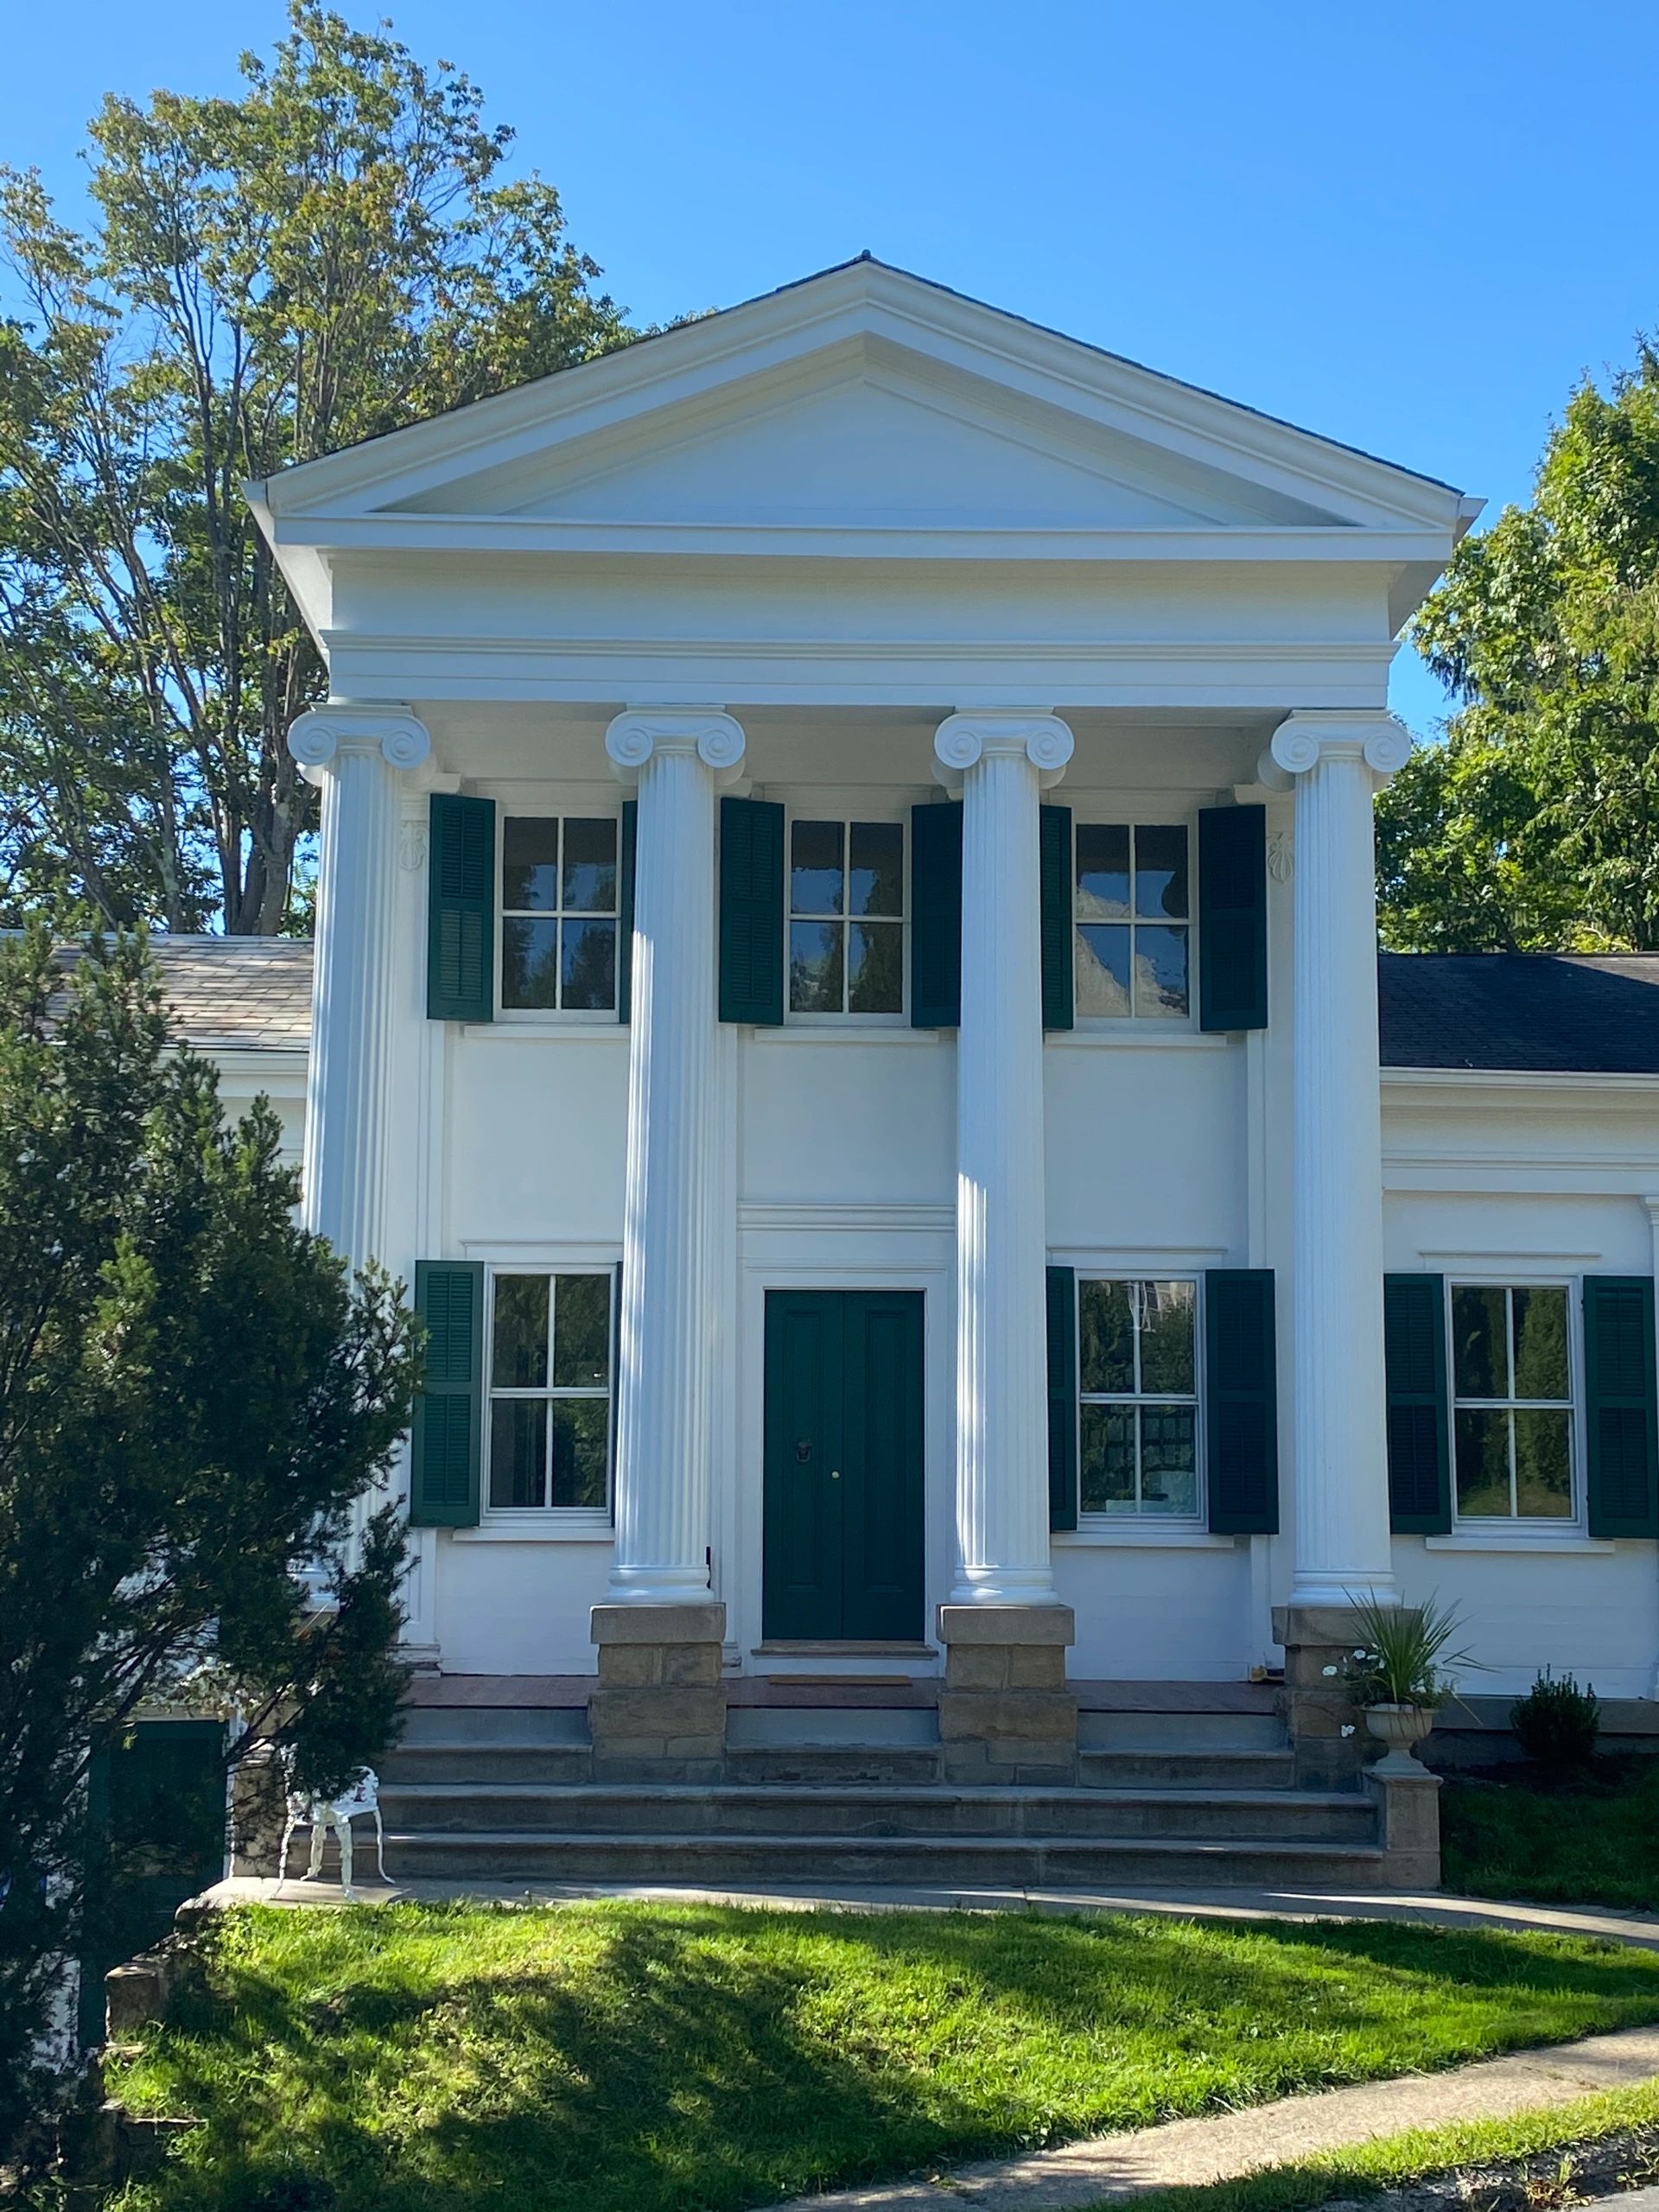 Historic Hall House (circa 1848) in Brookville, Pennsylvania.